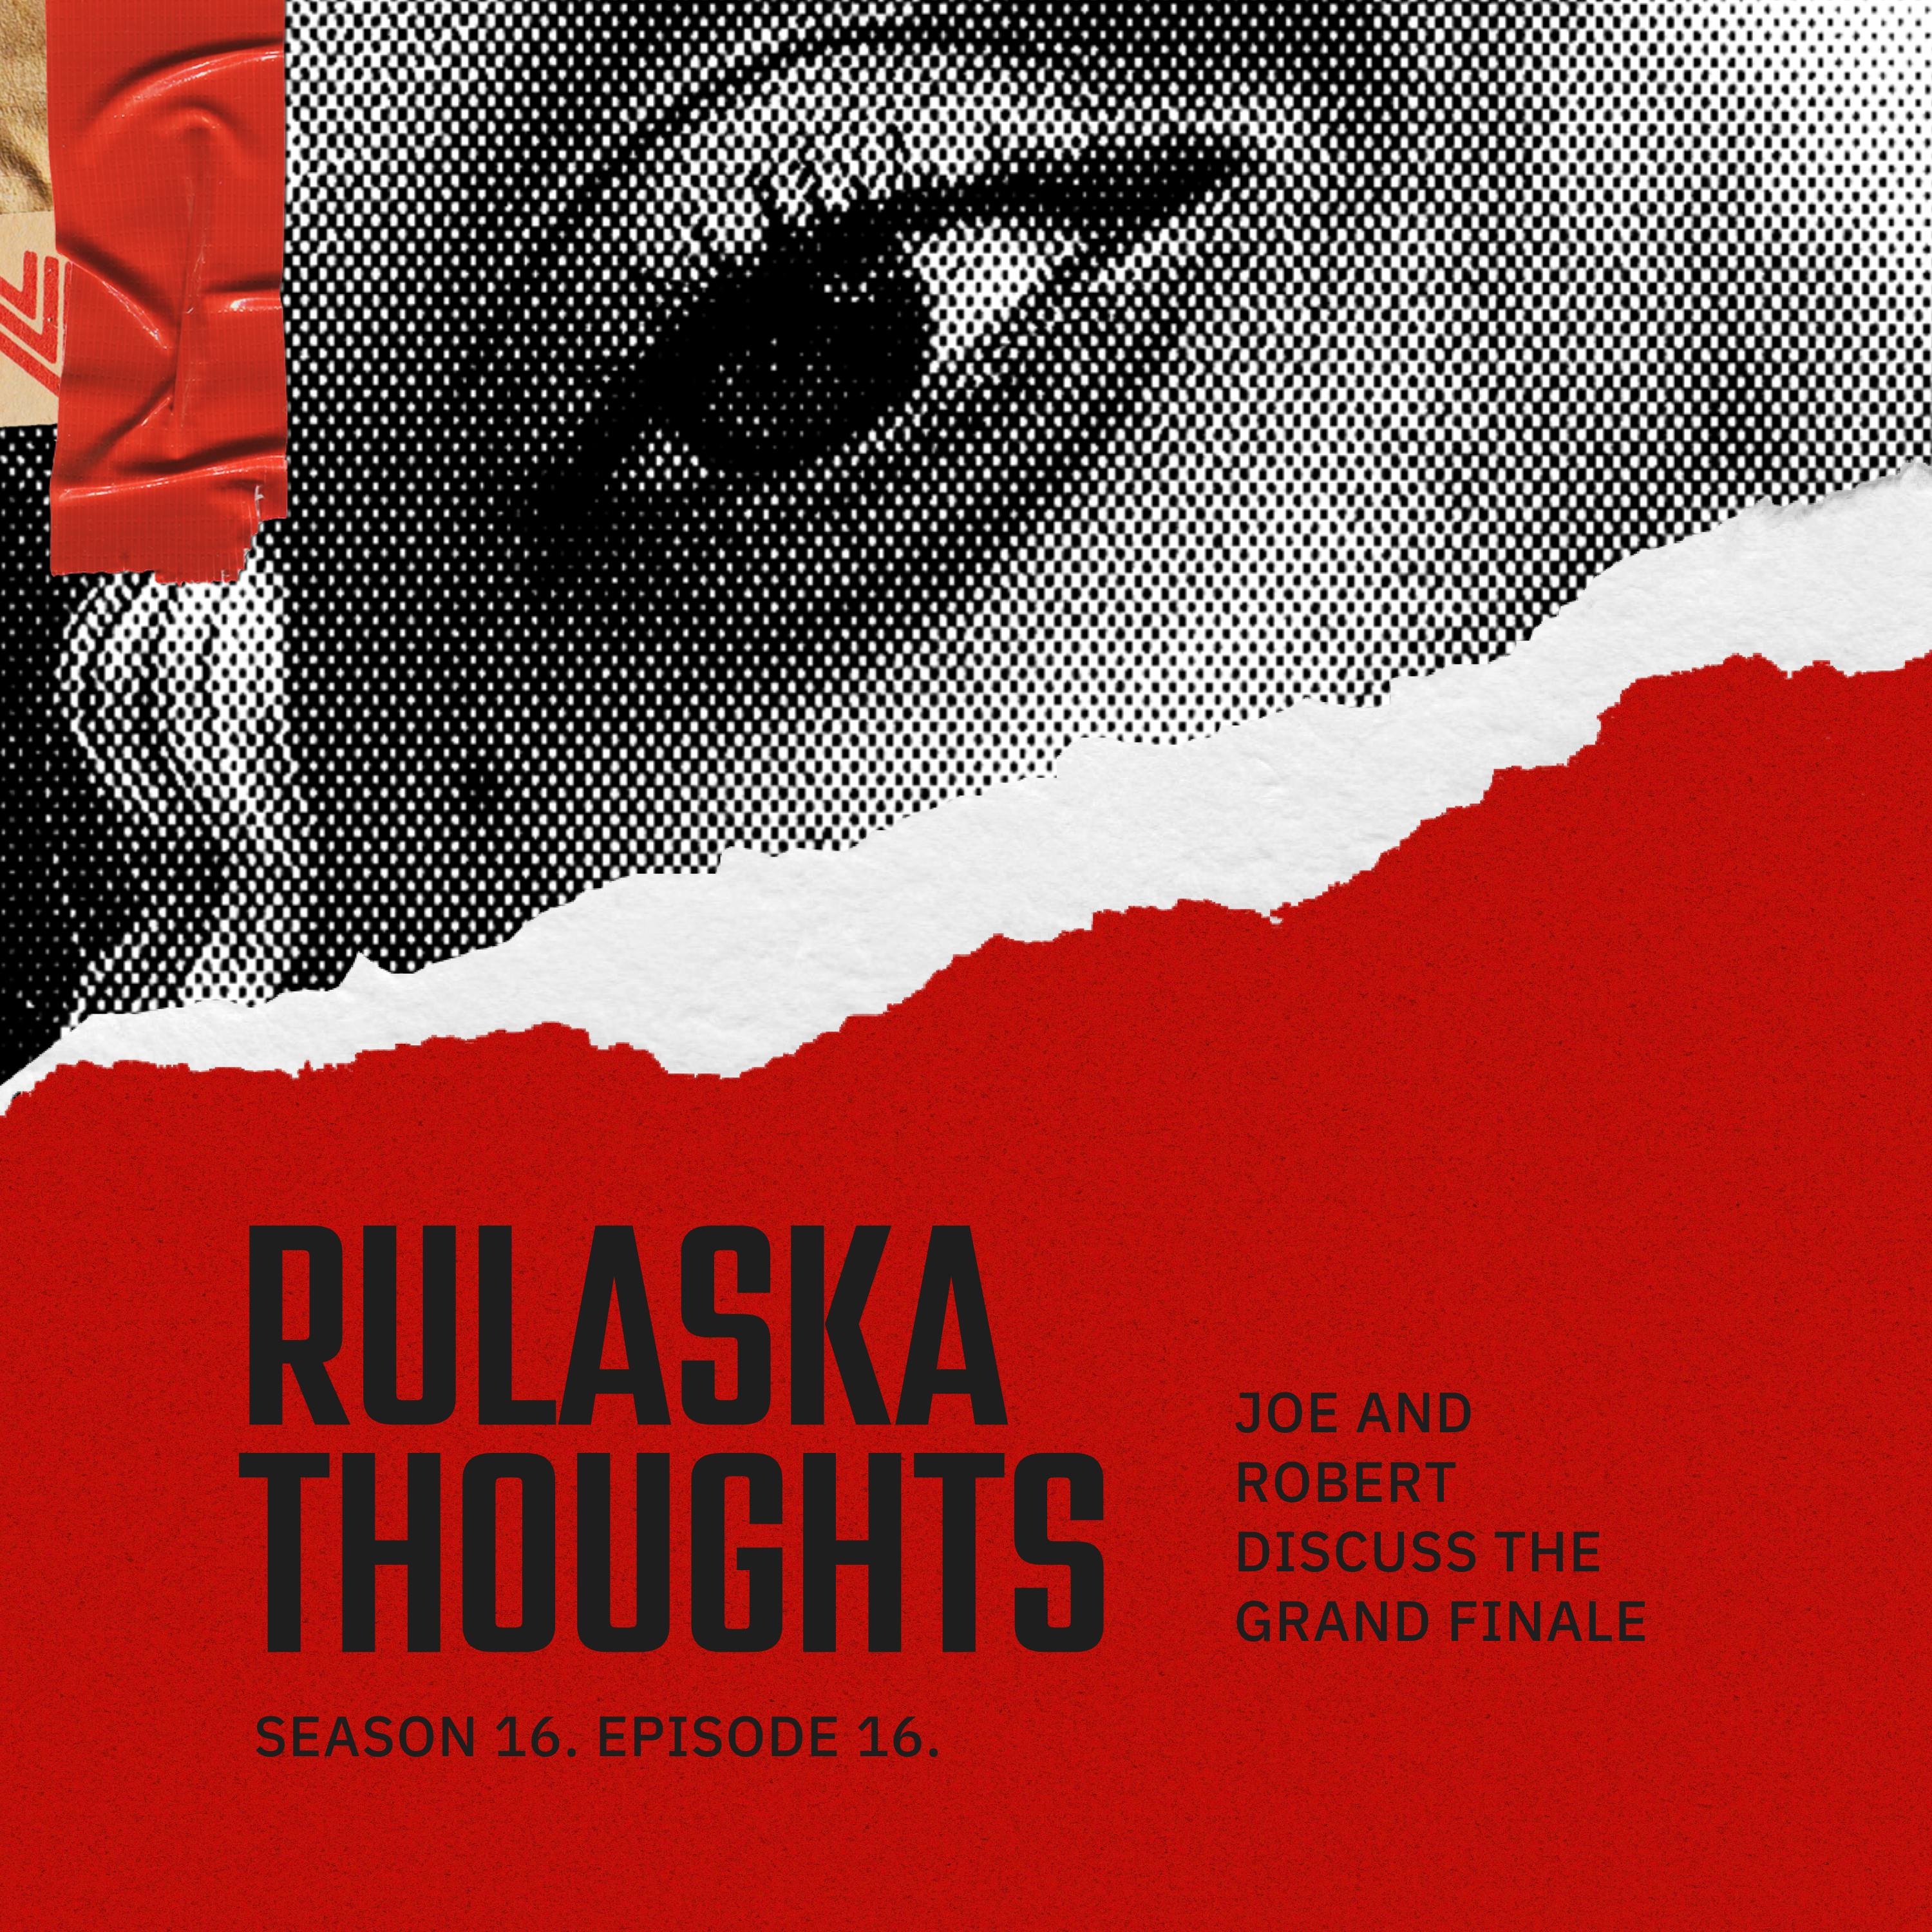 RulaskaThoughts: Season 16. Episode 16.